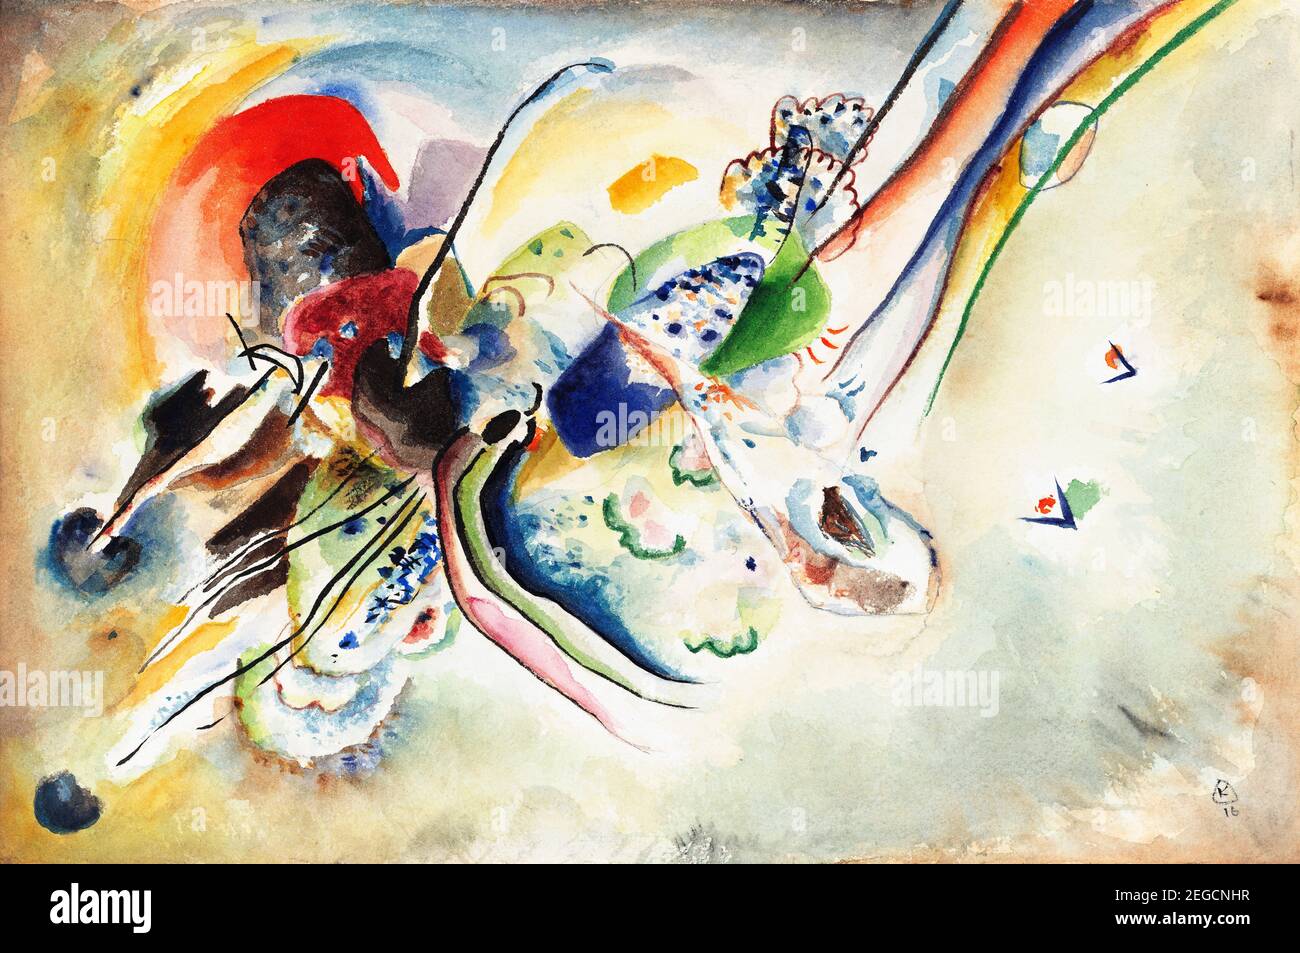 Pintura de Kandinsky. 'Composition (Study for 'Bild mit zwei roten Flecken')' de Wassily Kandinsky (1866-1944), acuarela y lápiz sobre papel, 1916 Foto de stock